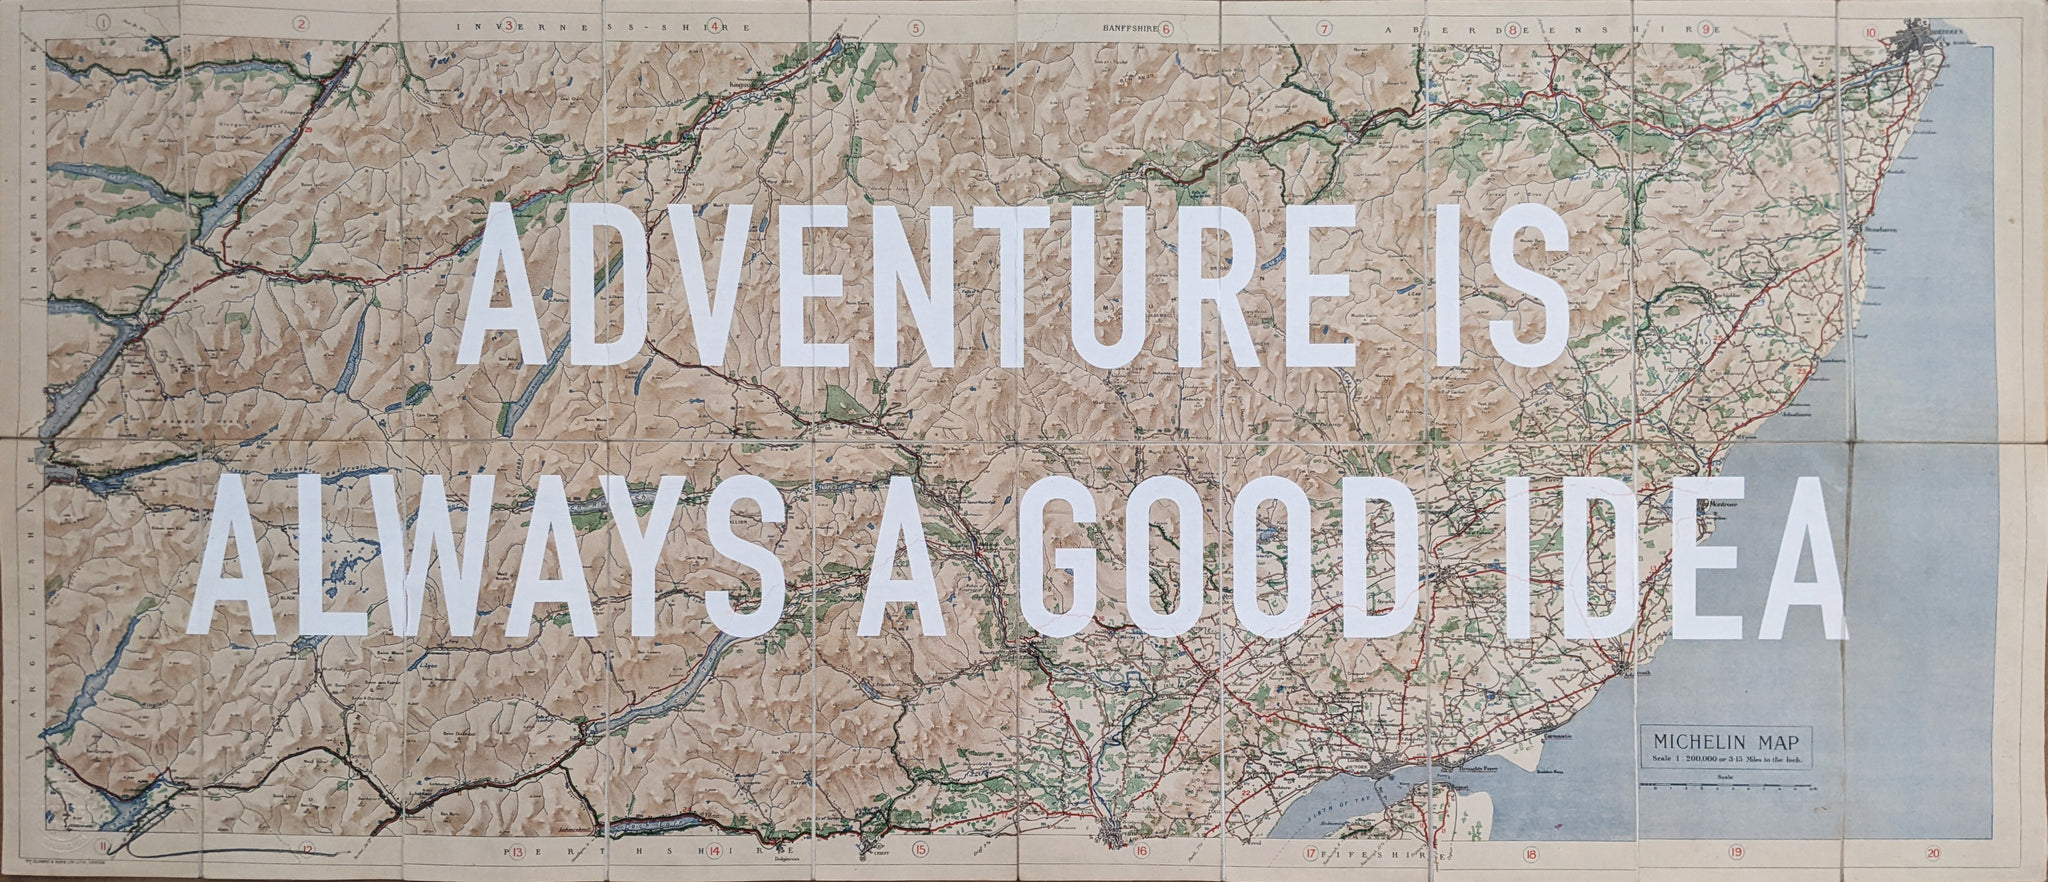 Adventure Is Always A Good Idea